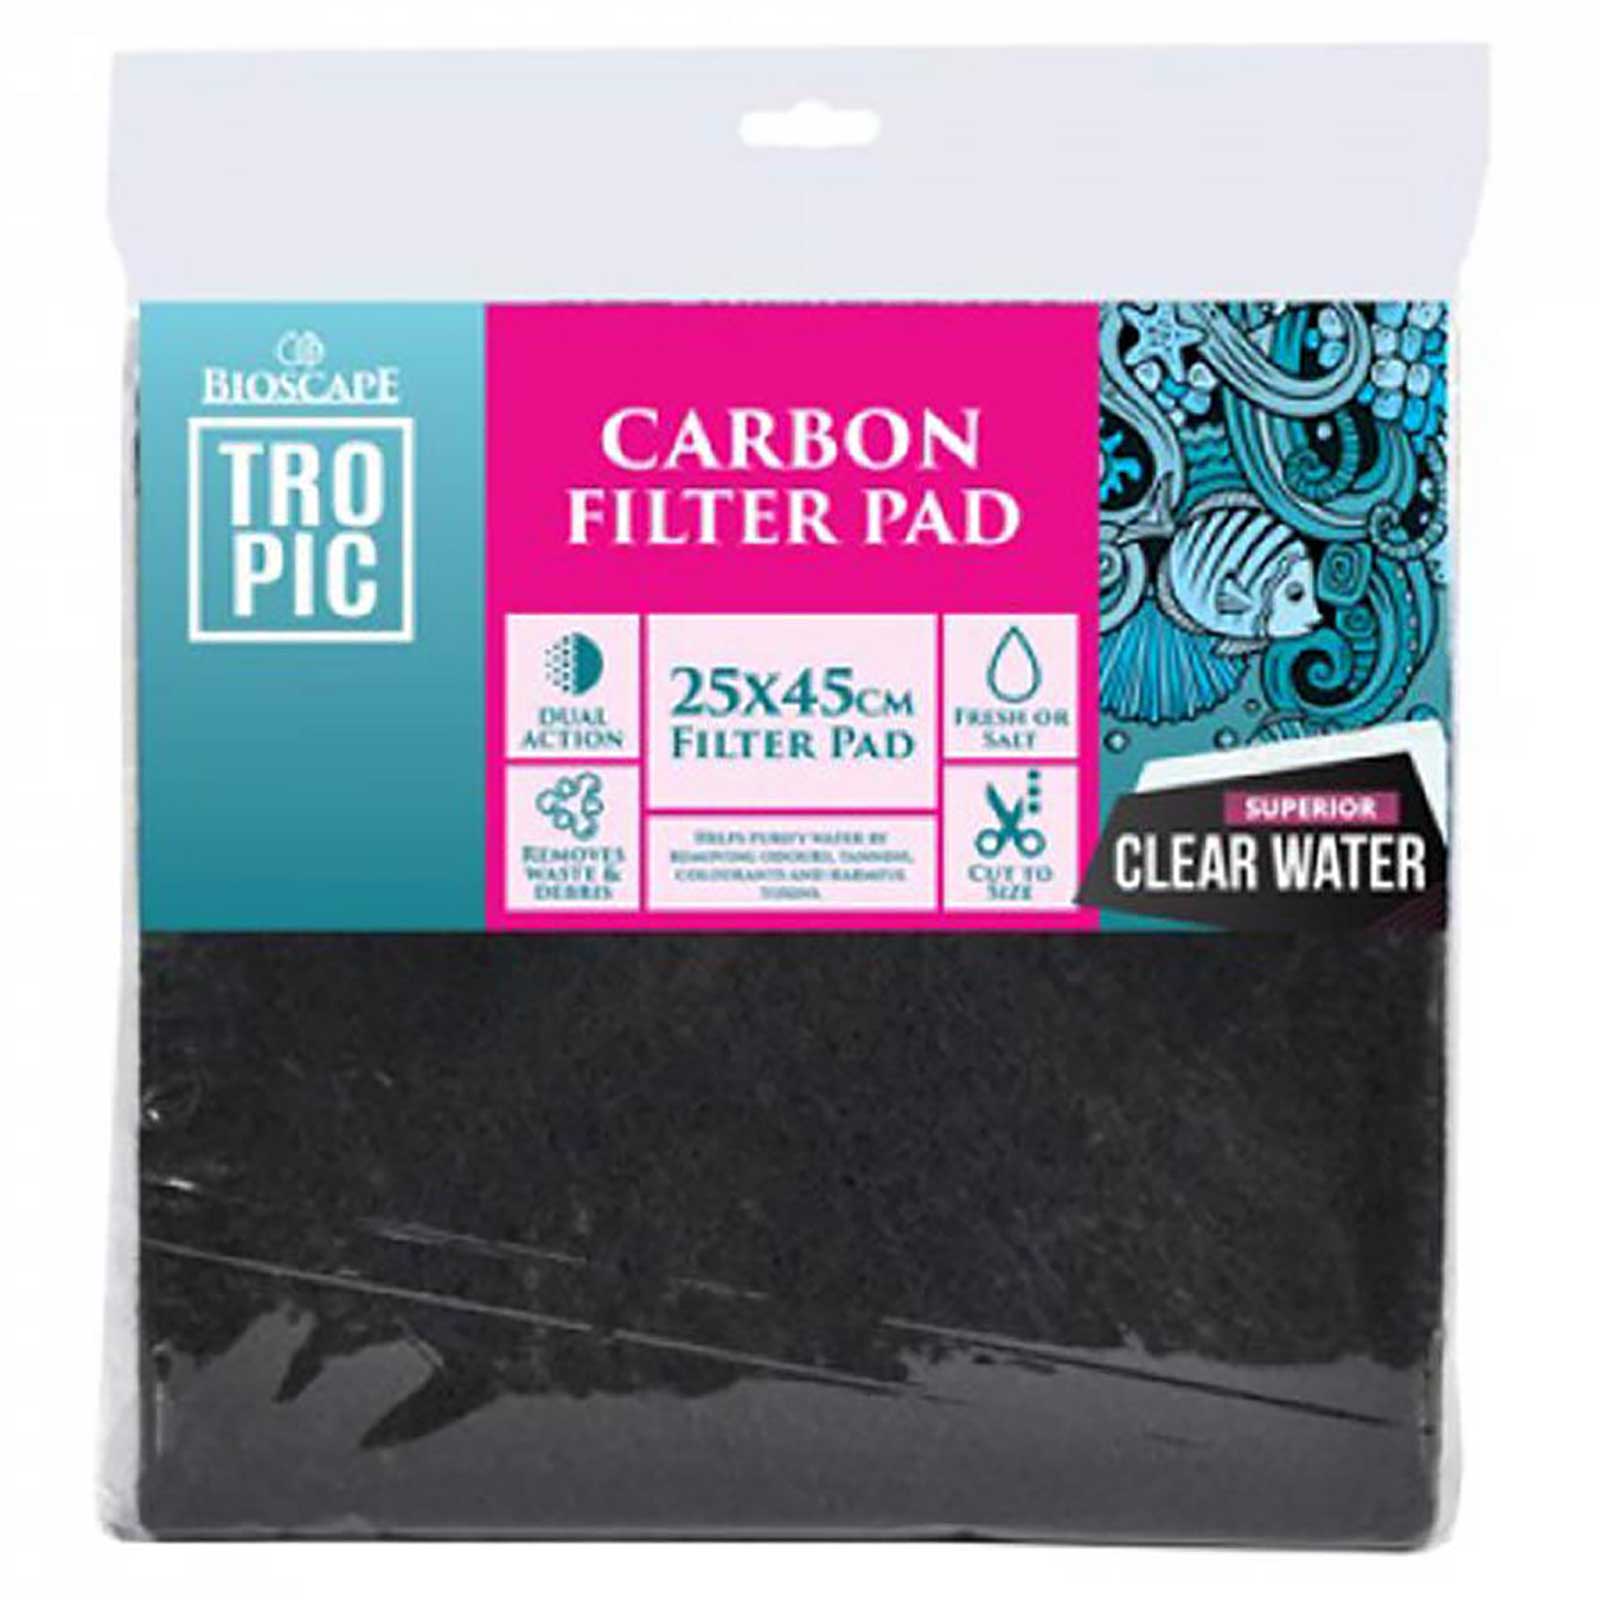 Bioscape Carbon Filter Pad